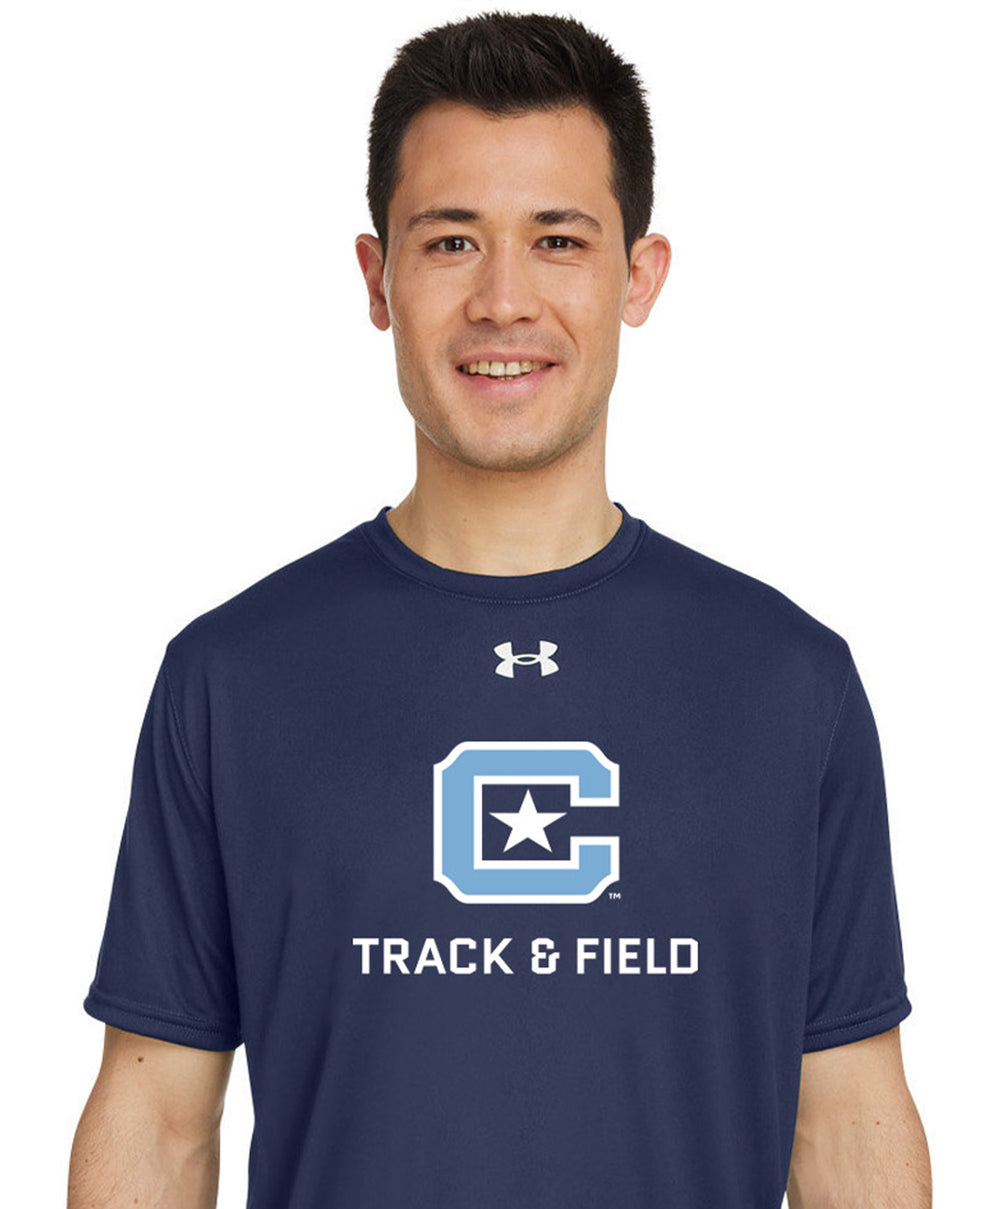 The Citadel, Club Sport - Track & Field,  Under Armour Men's Team Tech T-Shirt- Navy